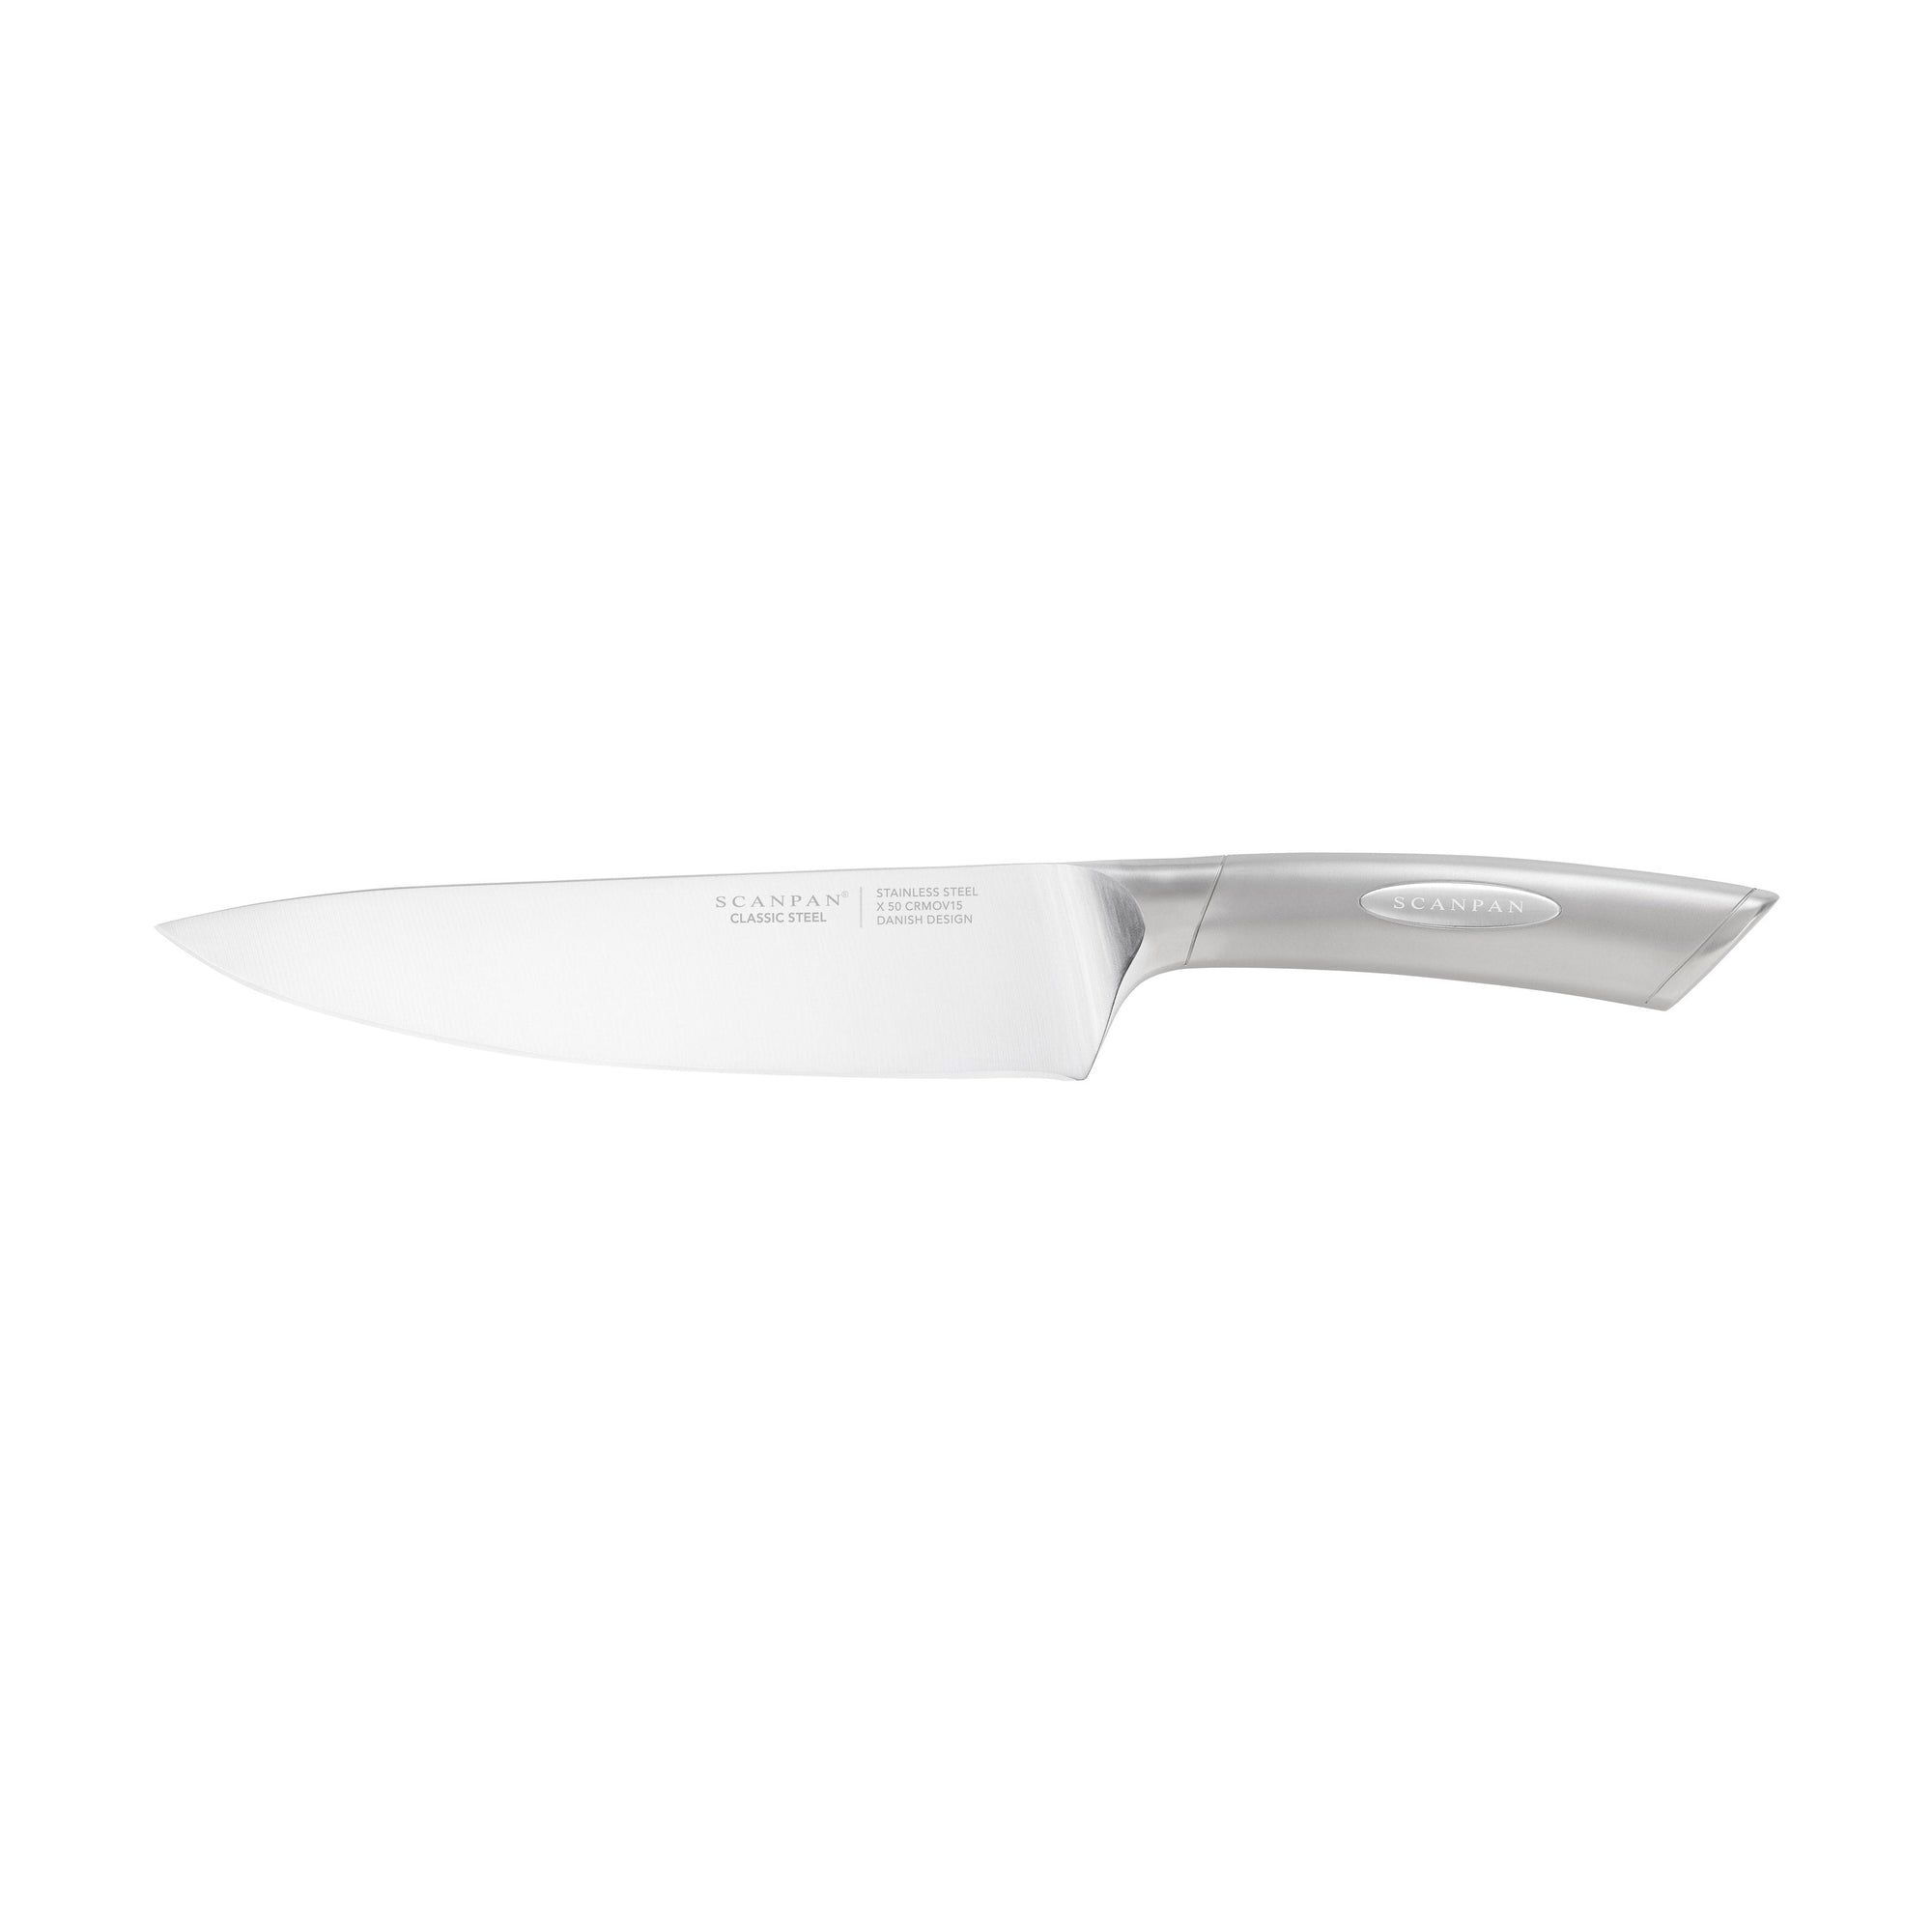 SCANPAN Classic Steel Chef Knife 20cm